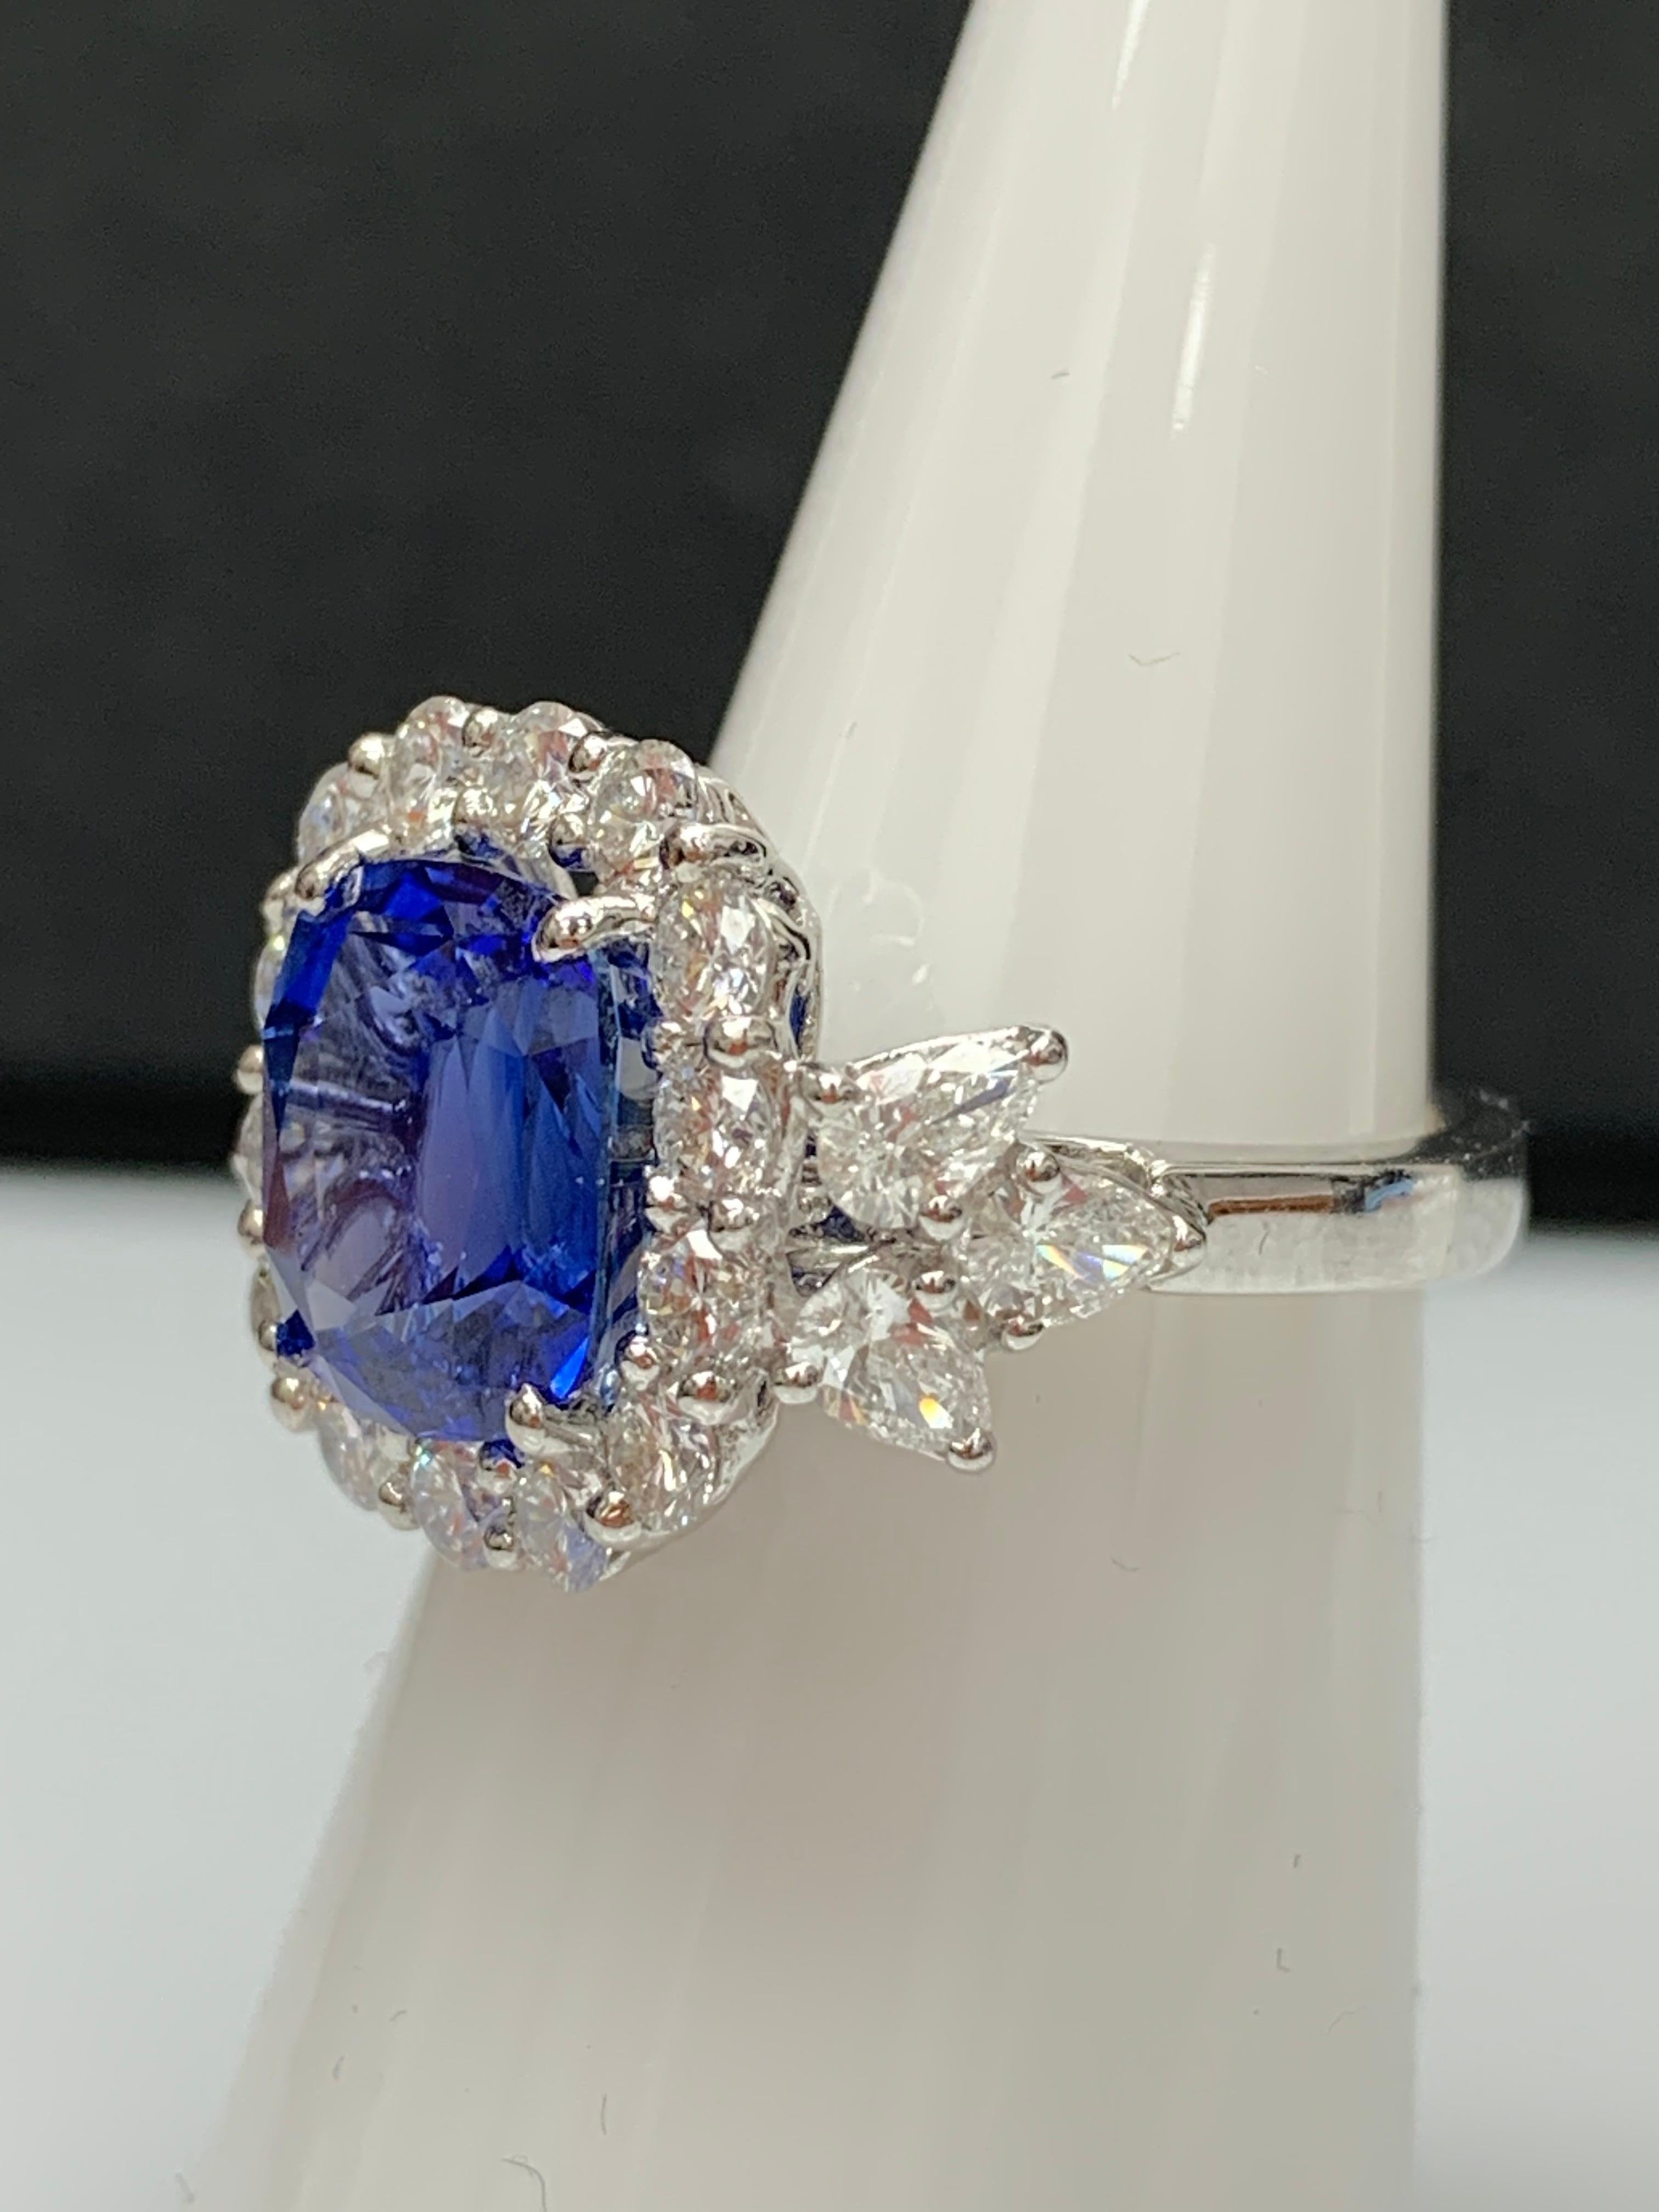 6.61 Carat Cushion Cut Blue Sapphire Diamond Engagement Ring in Platinum For Sale 15